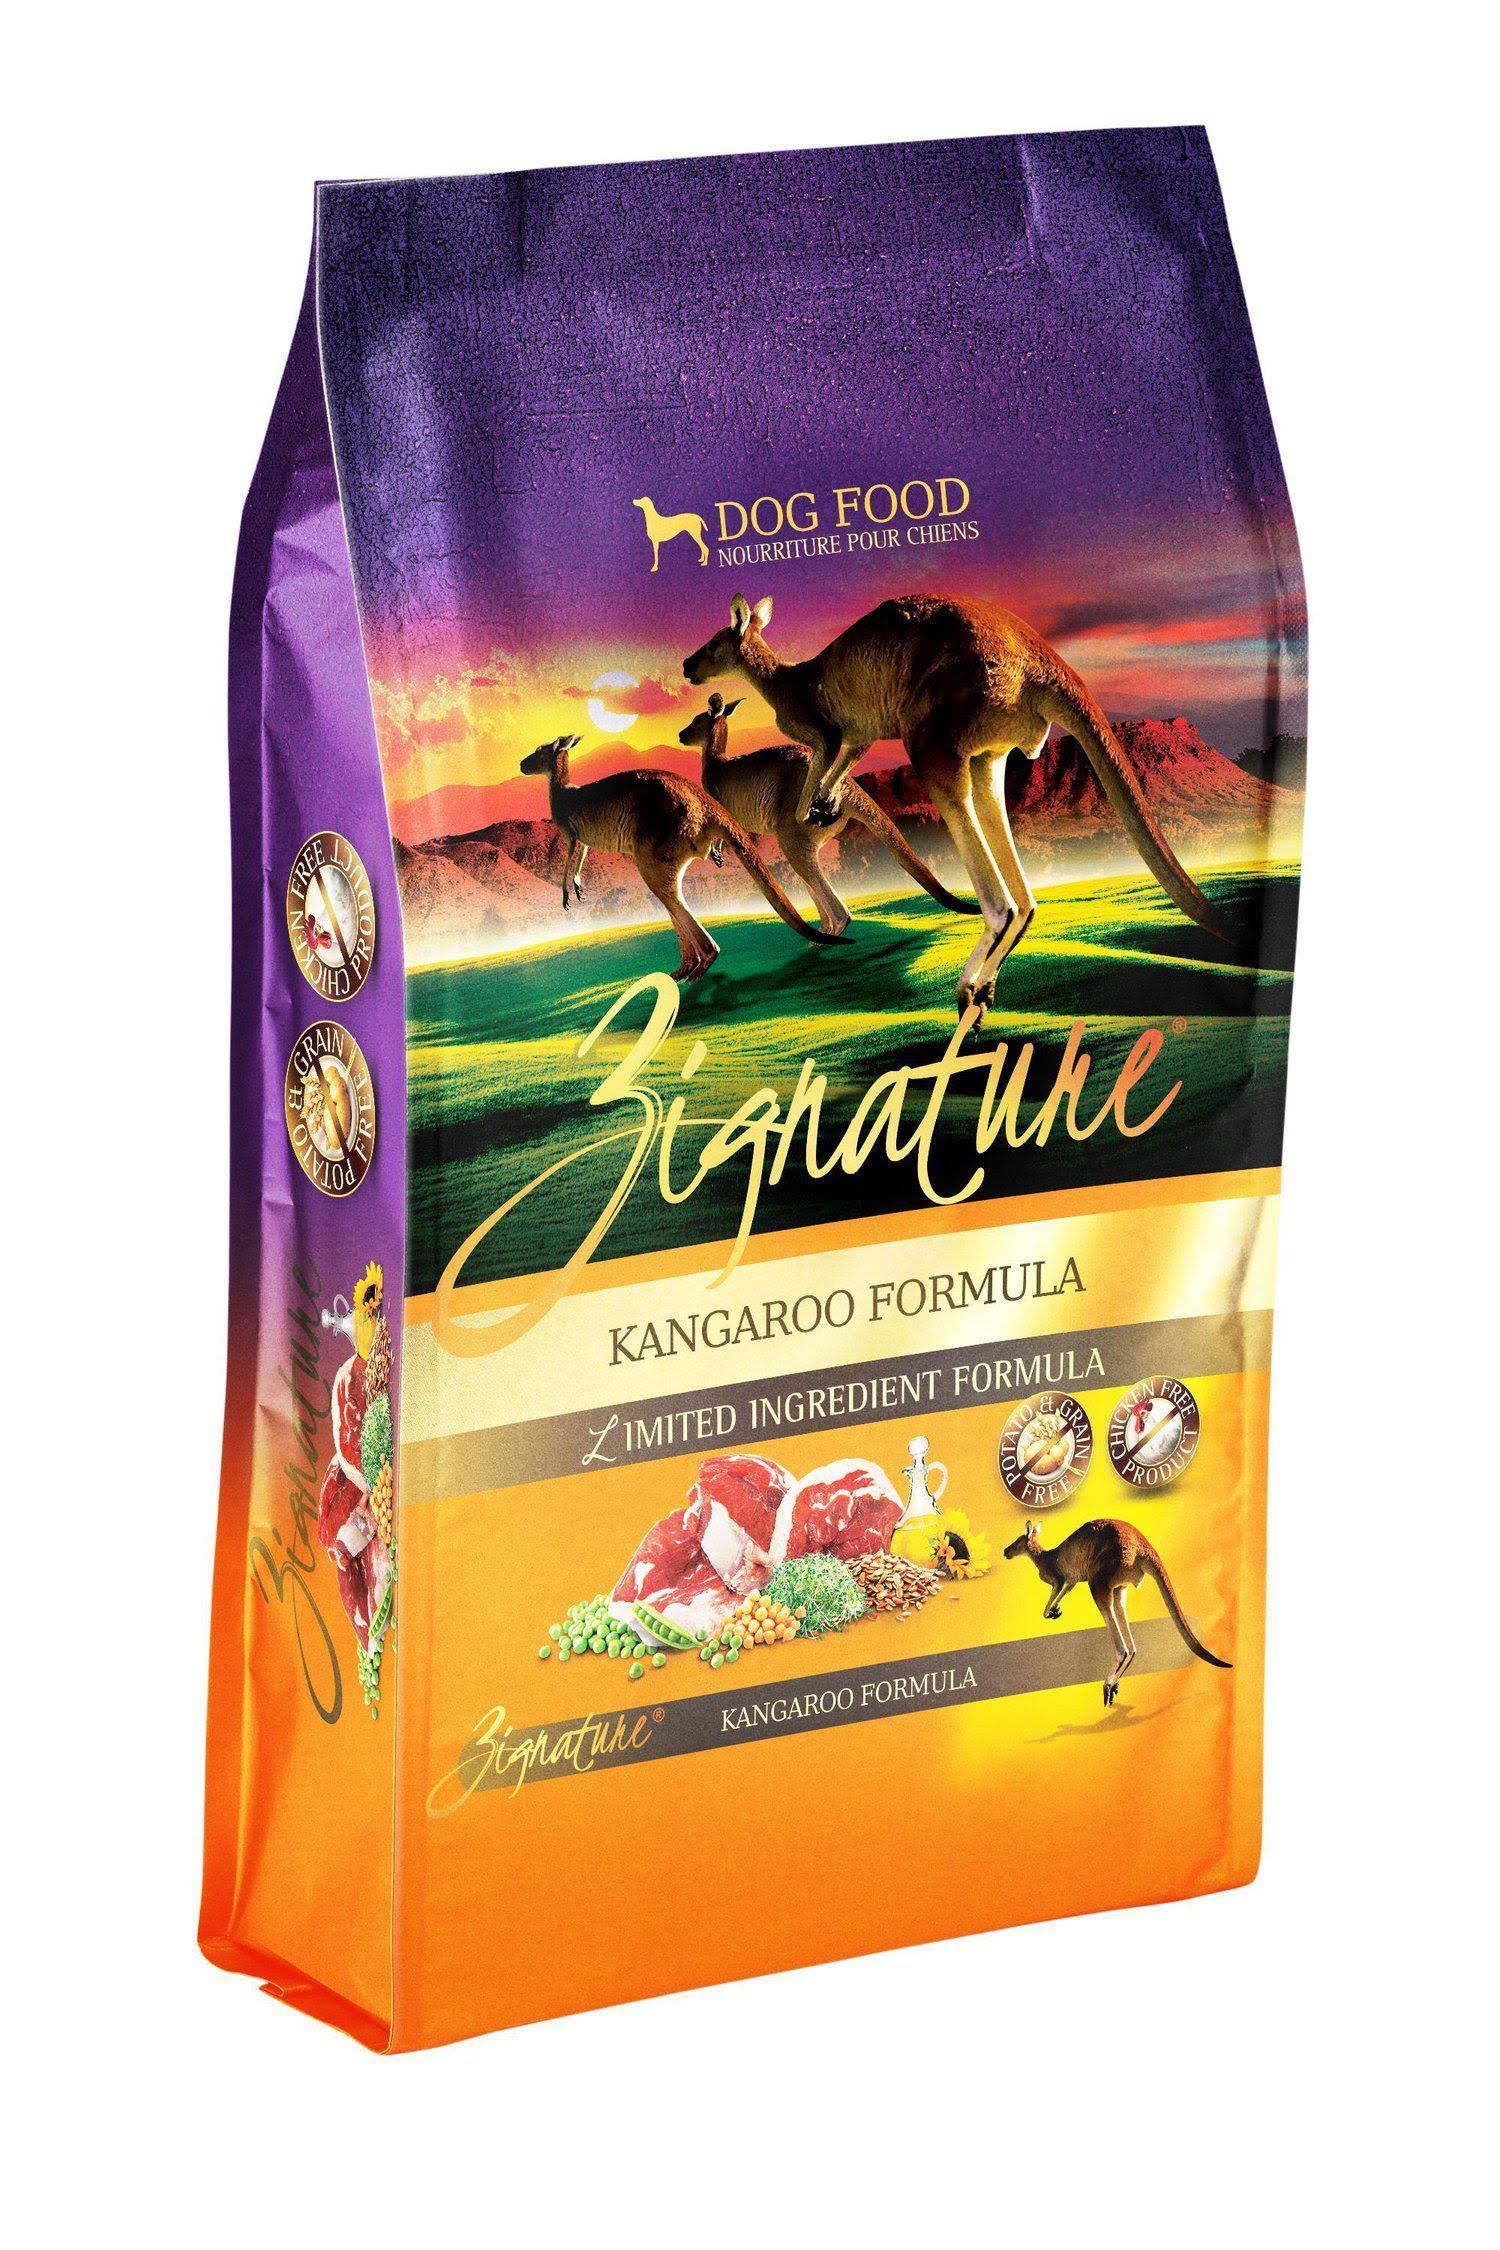 Zignature Kangaroo Limited Ingredient Formula Dry Dog Food